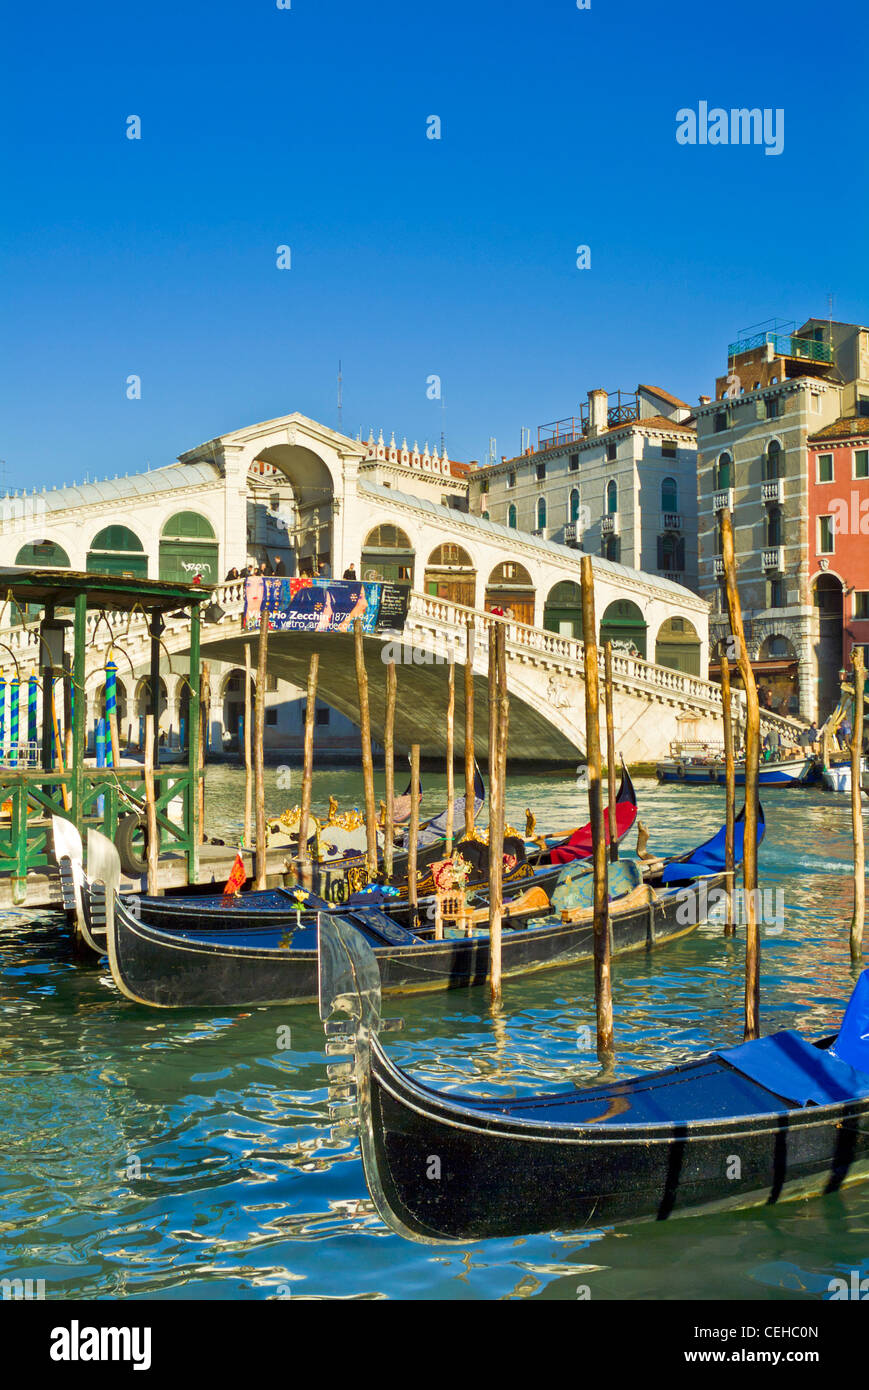 Italy venice italy Gondolas moored by the Fondementa del Vin showing the Rialto bridge Ponte del Rialto over the Grand canal Venice italy eu europe Stock Photo